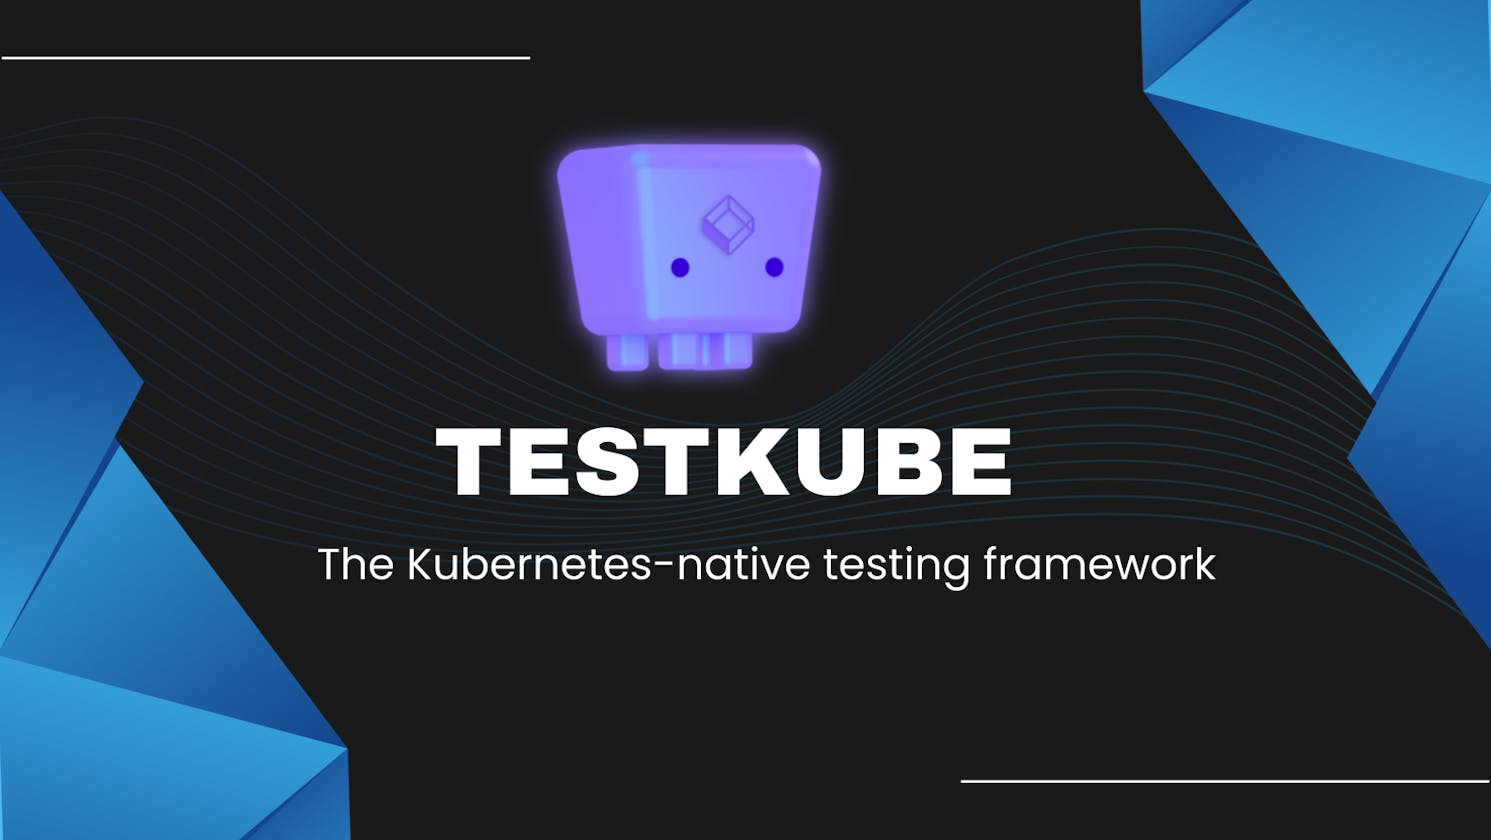 Testkube: The Kubernetes-native testing framework